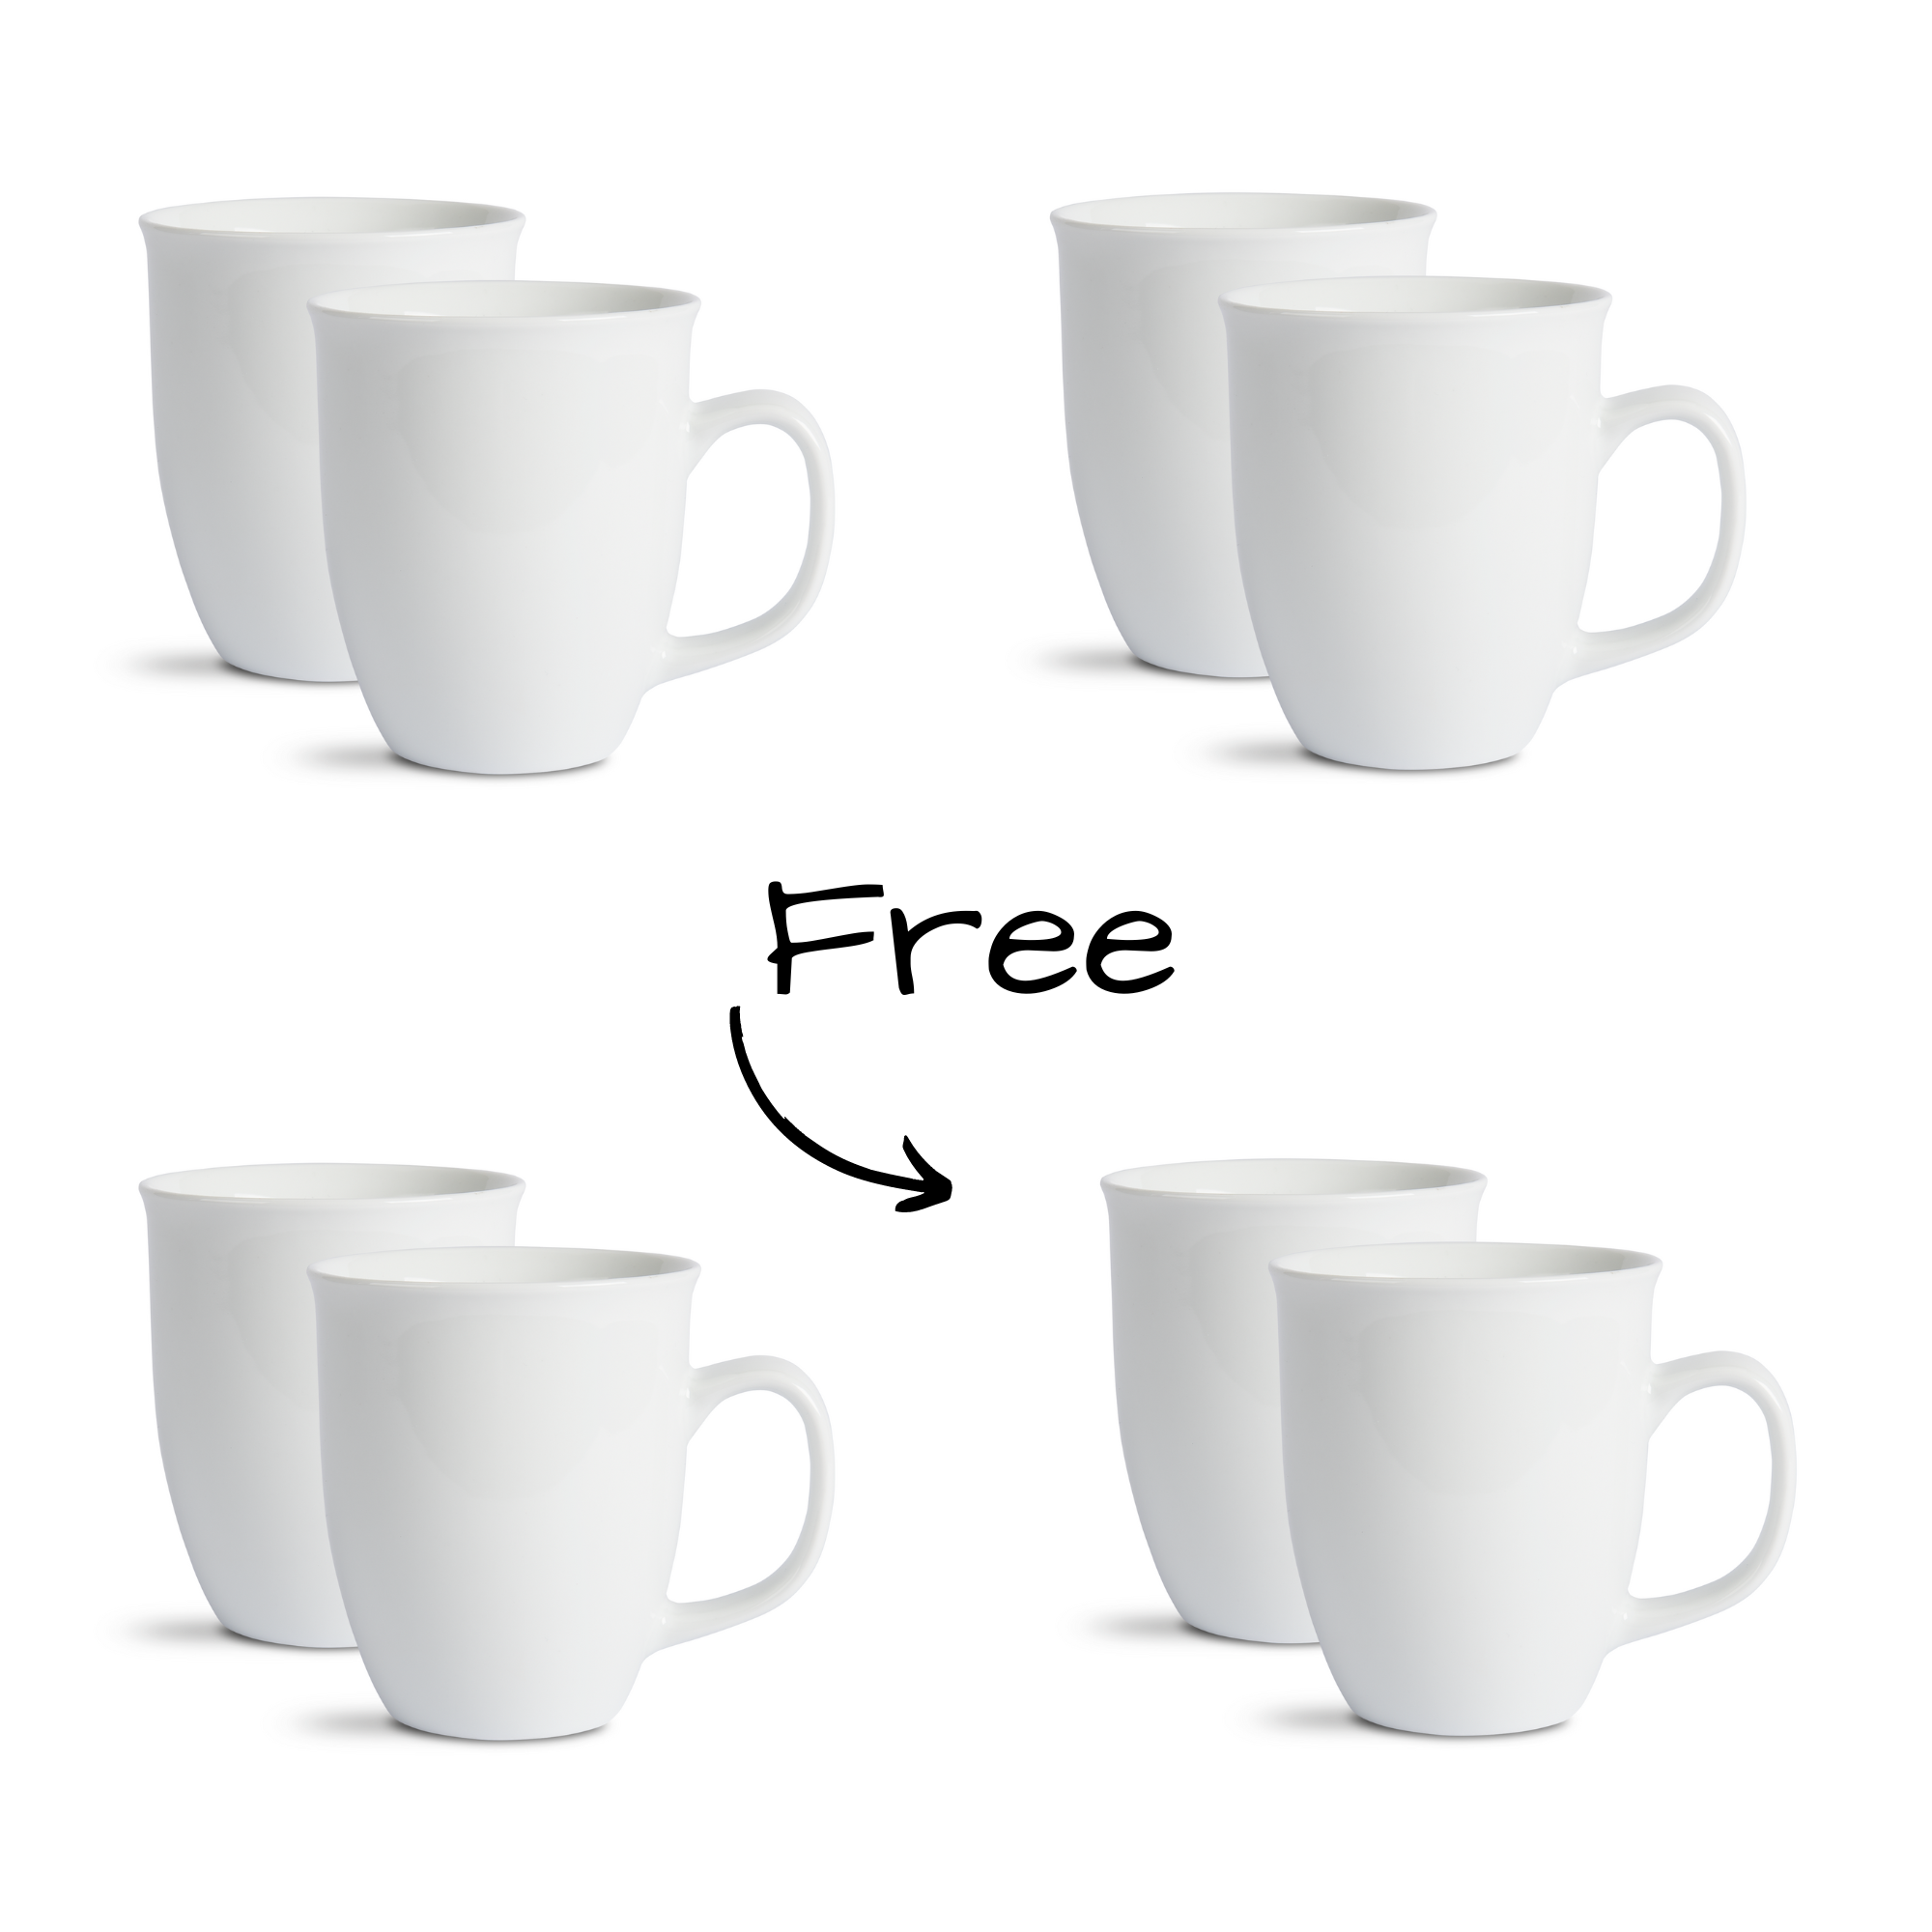 Buy 6 get 2 free! Side view, porcelain mug